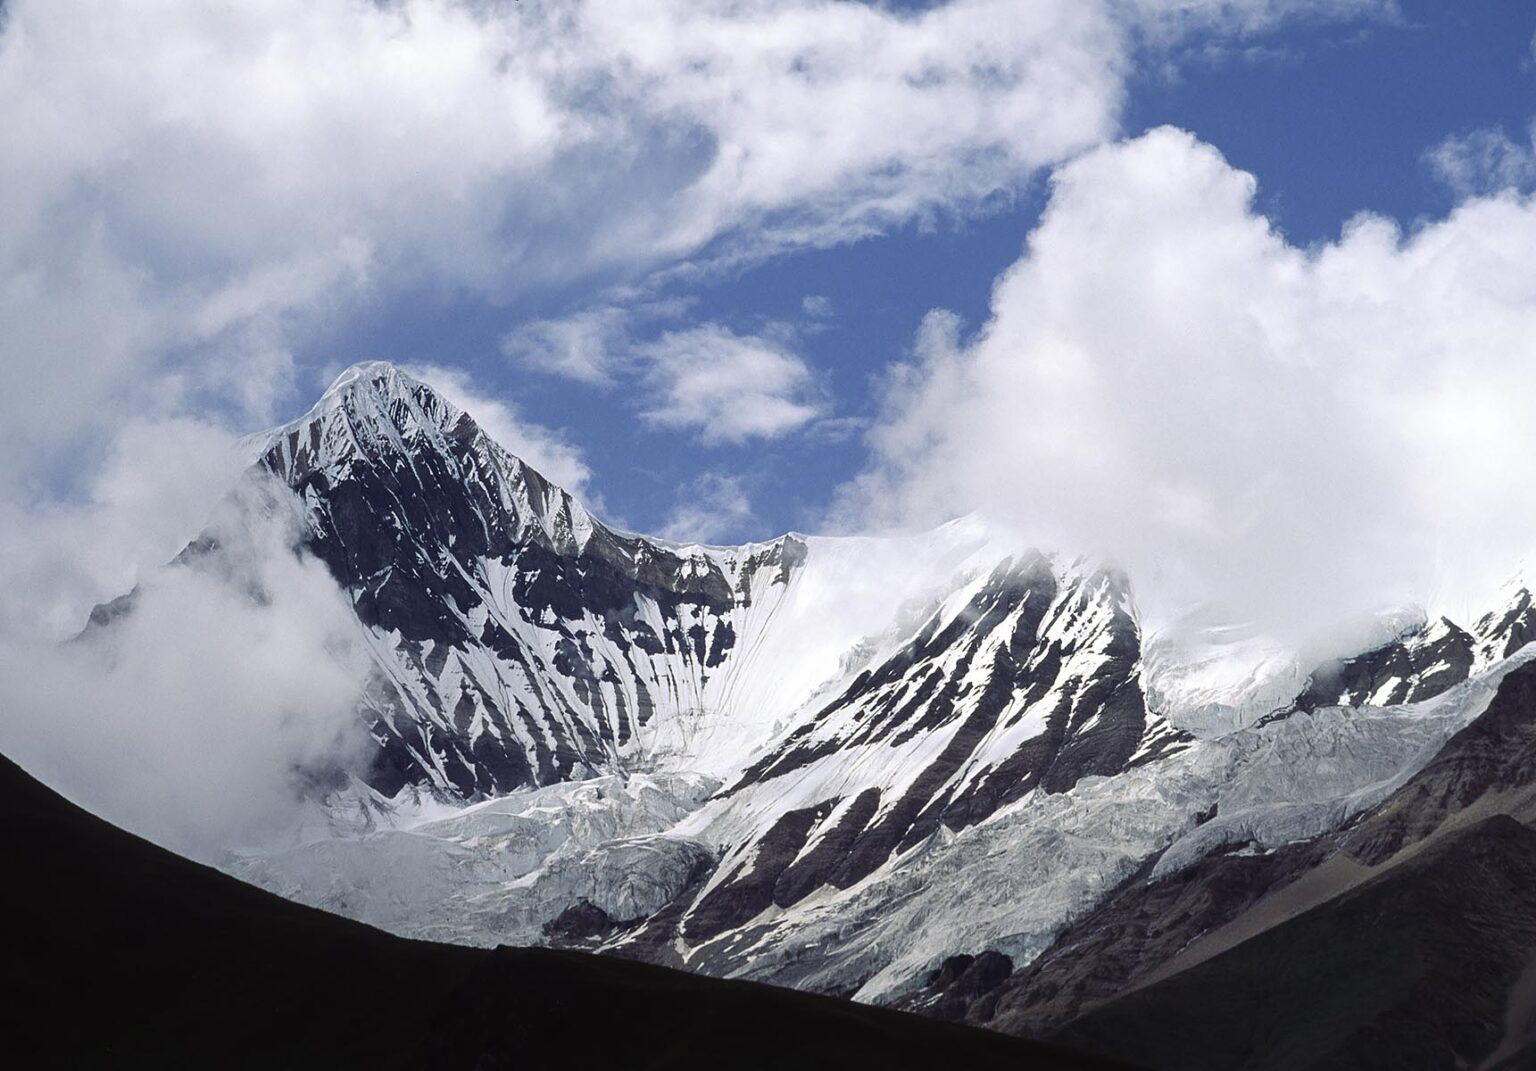 KANG CHUNNE PEAK rises to 6443 meters above barren HIMALAYAN hillsides - DOLPO DISTRICT, NEPAL